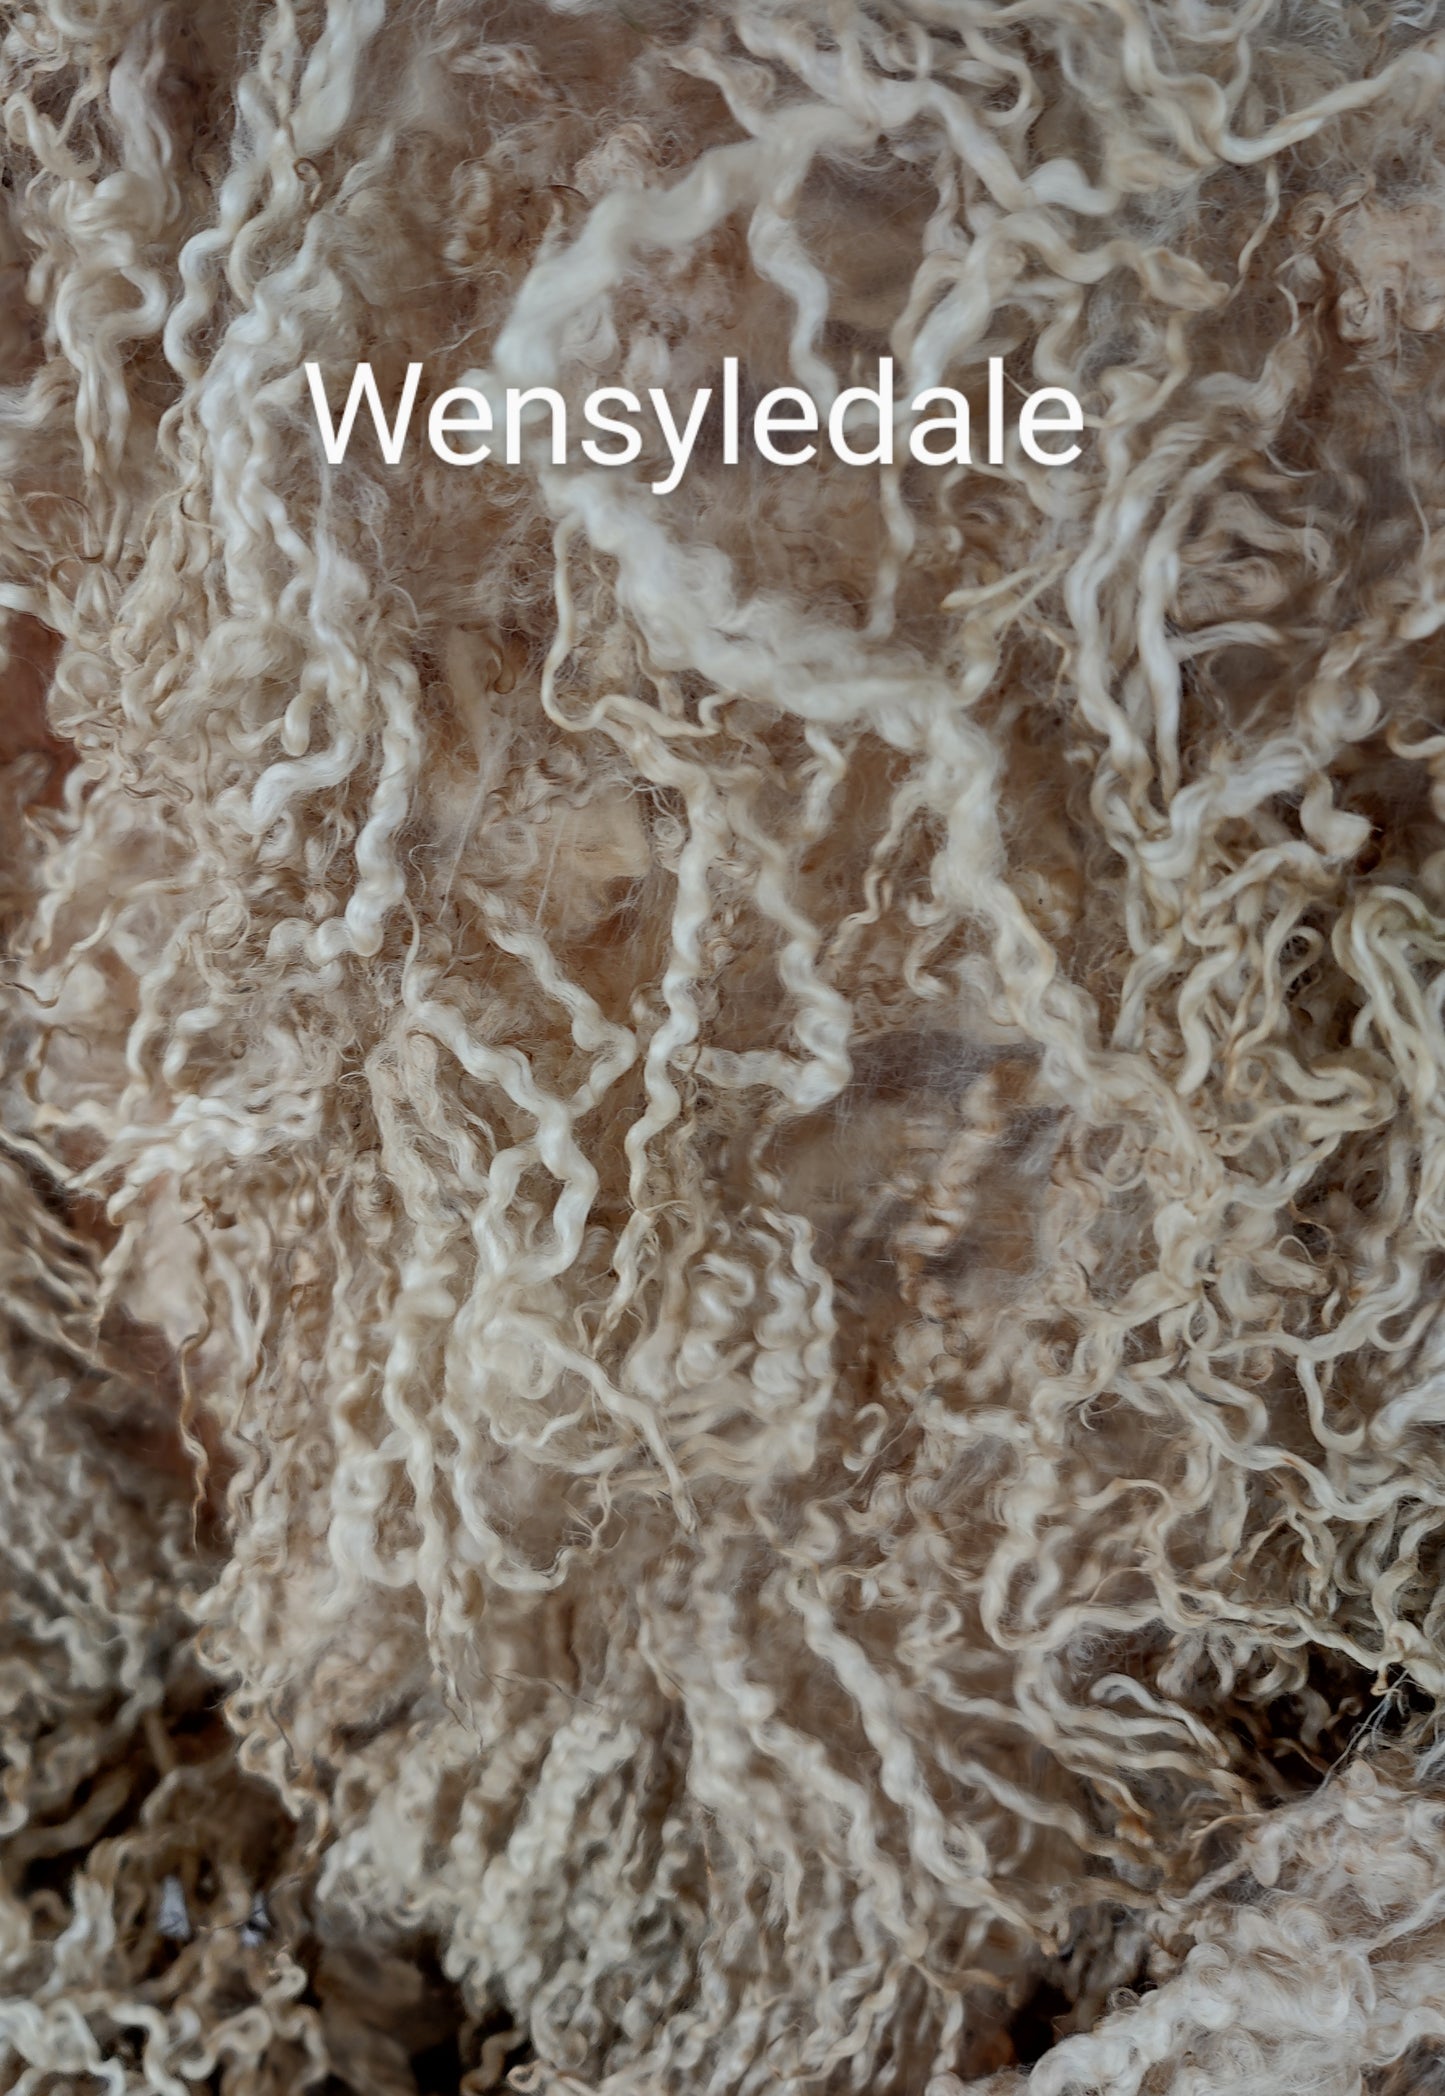 Big full wensyledale 1st clip raw fleece incredible long locks 5 lbs